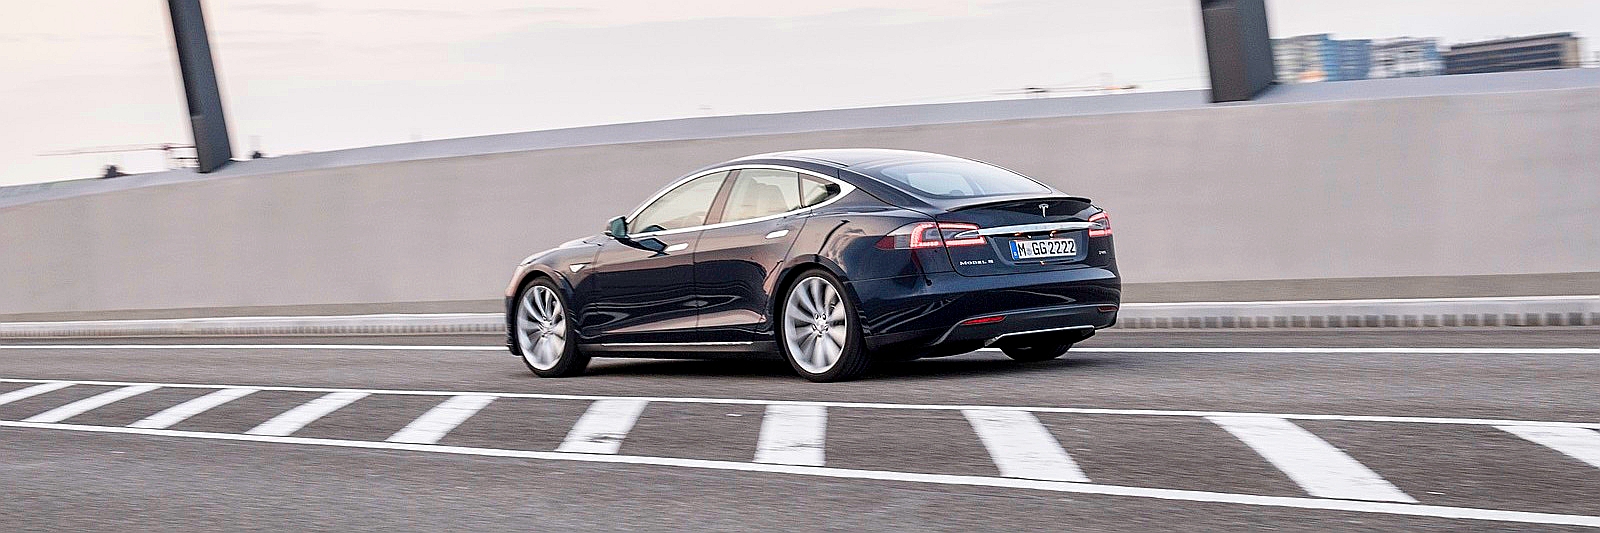 Tesla Model-S набирает обороты